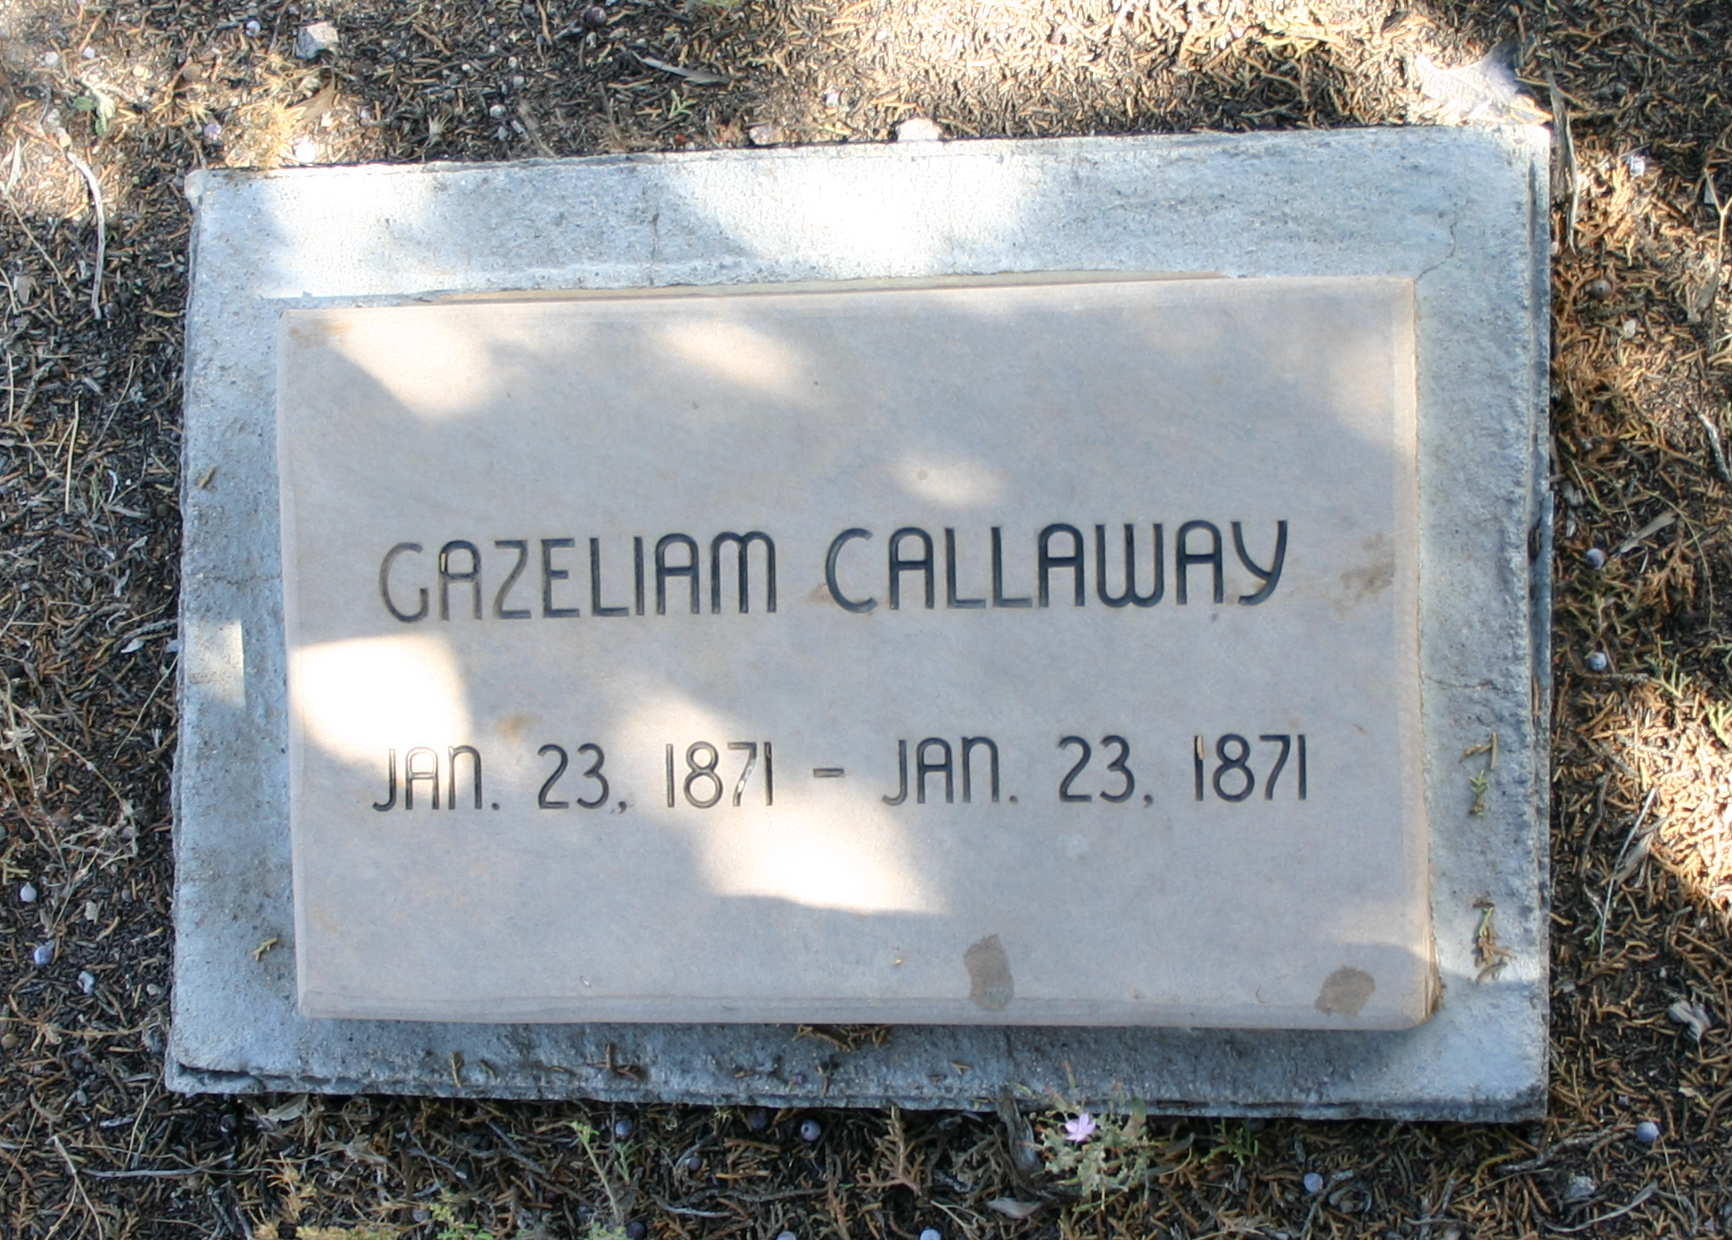 Gazeliam Callaway gravestone at the Hebron Cemetery